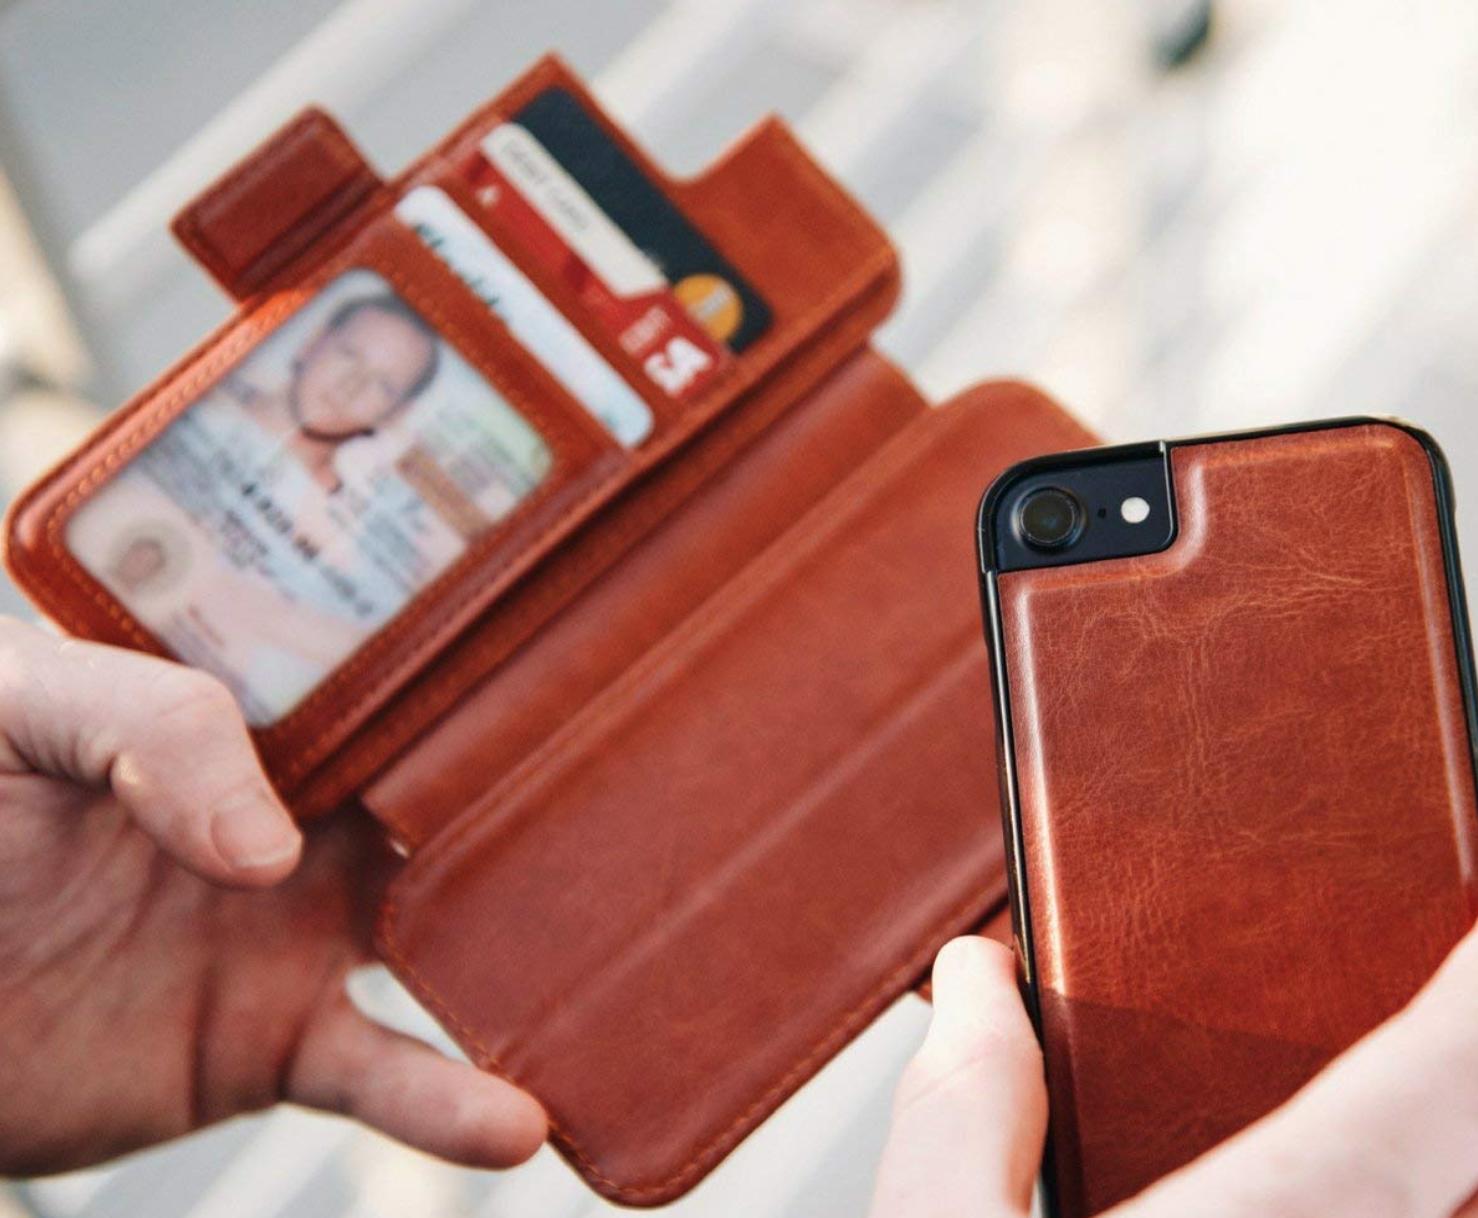 ZVE Wallet Zipper Pocket Protective Phone Case iPhone 8 Plus